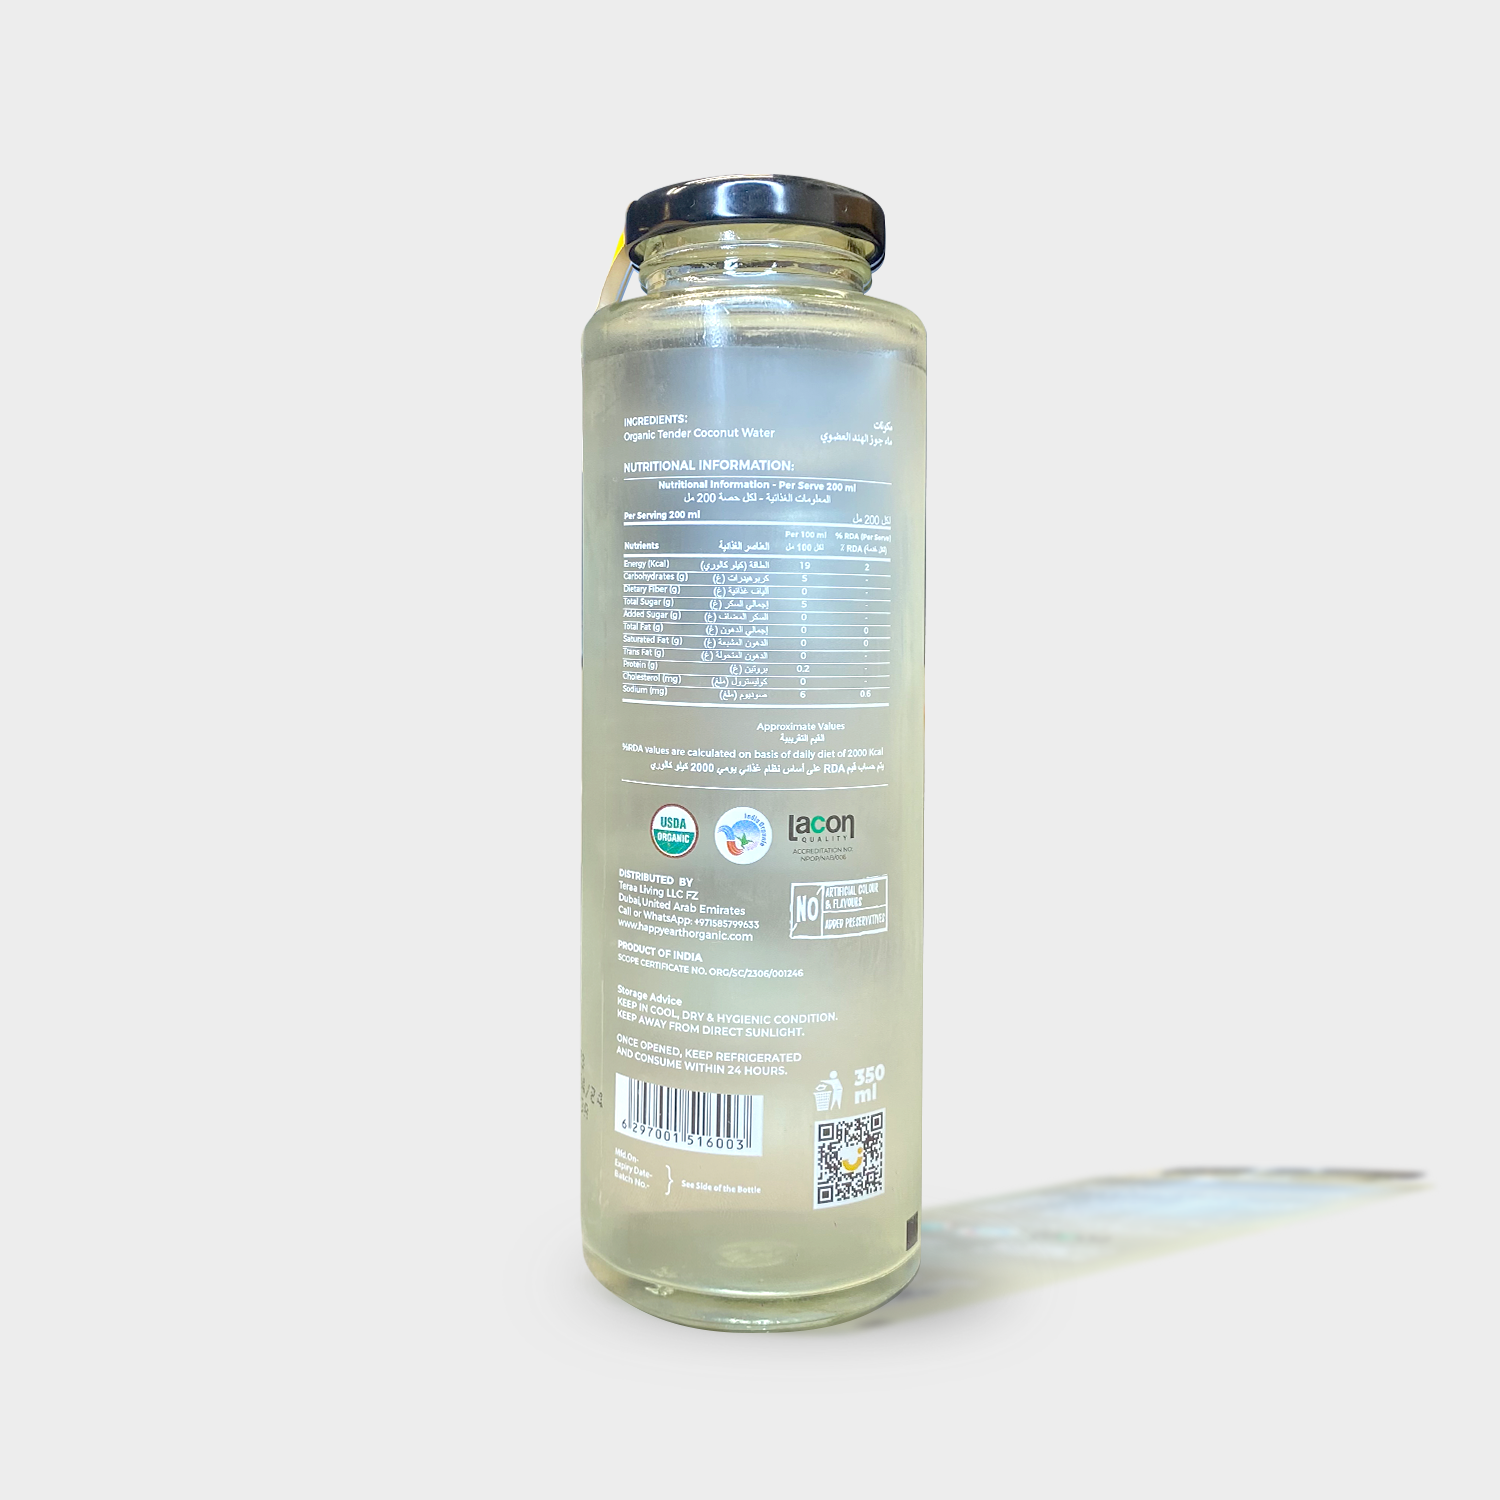 HAPPY EARTH Organic Coconut Water, 350ml - Organic, Natural